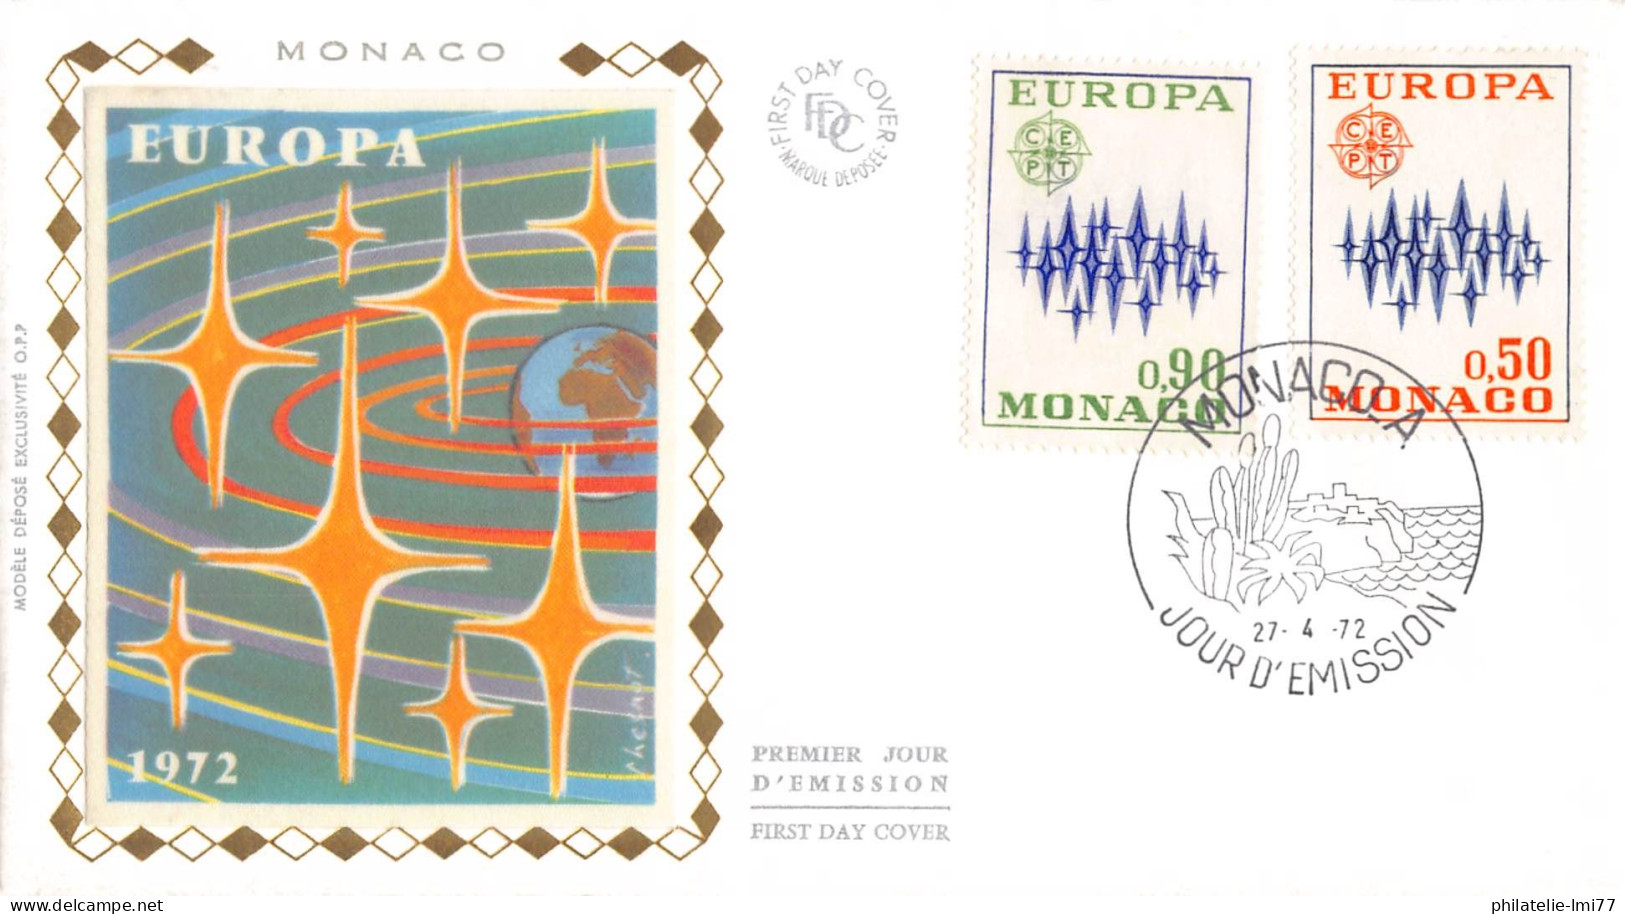 Monaco - FDC Europa 1972 - 1972